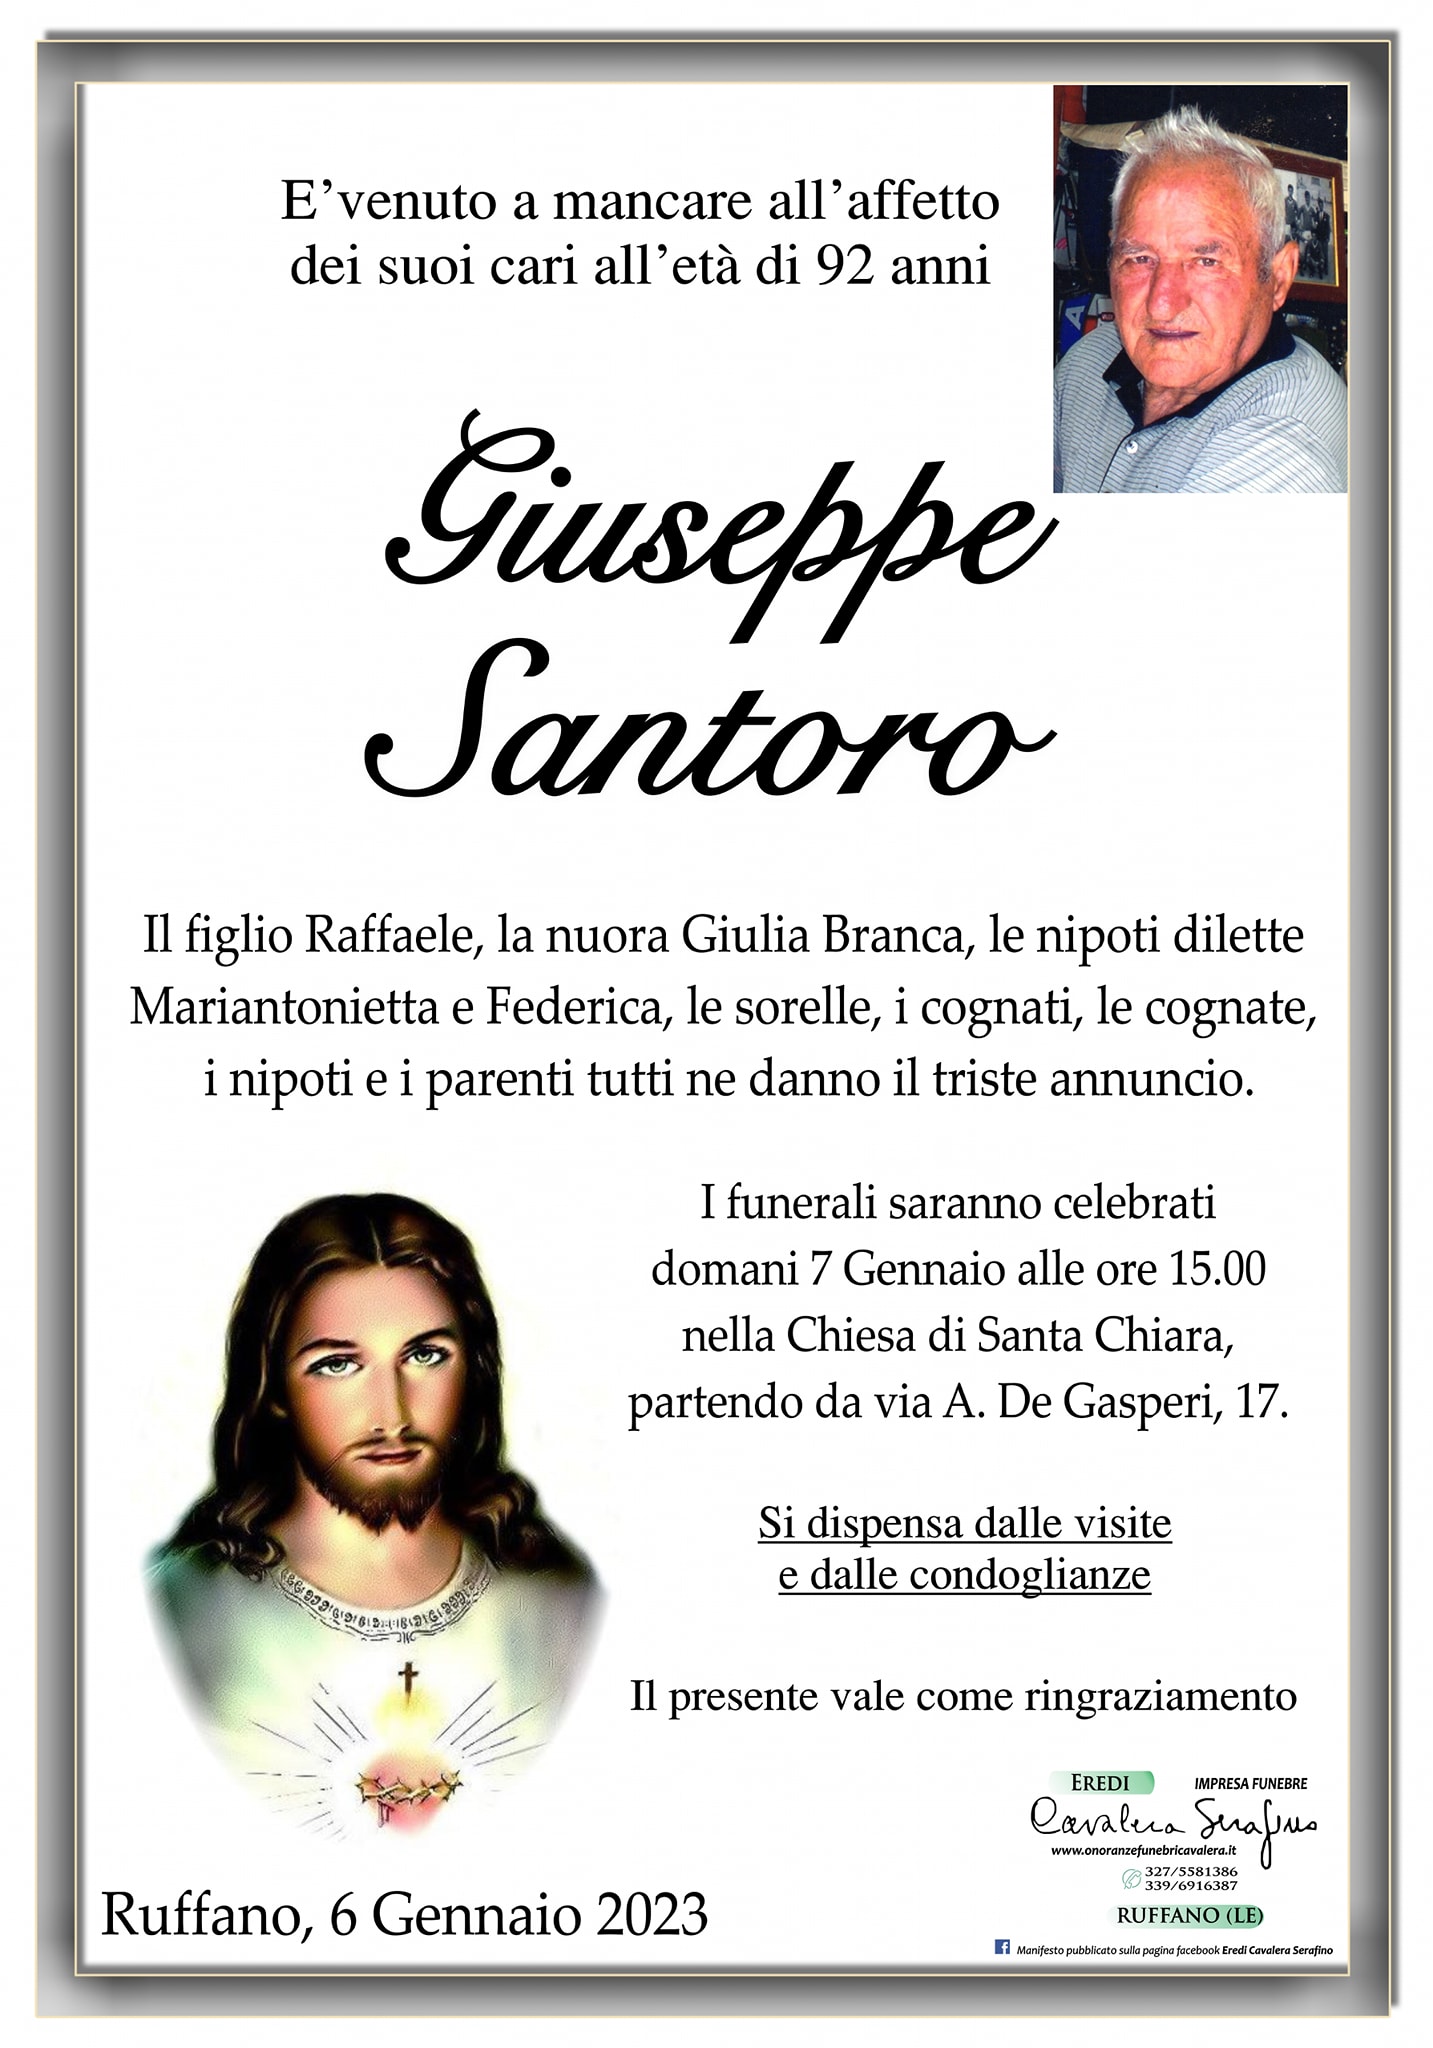 Giuseppe Santoro